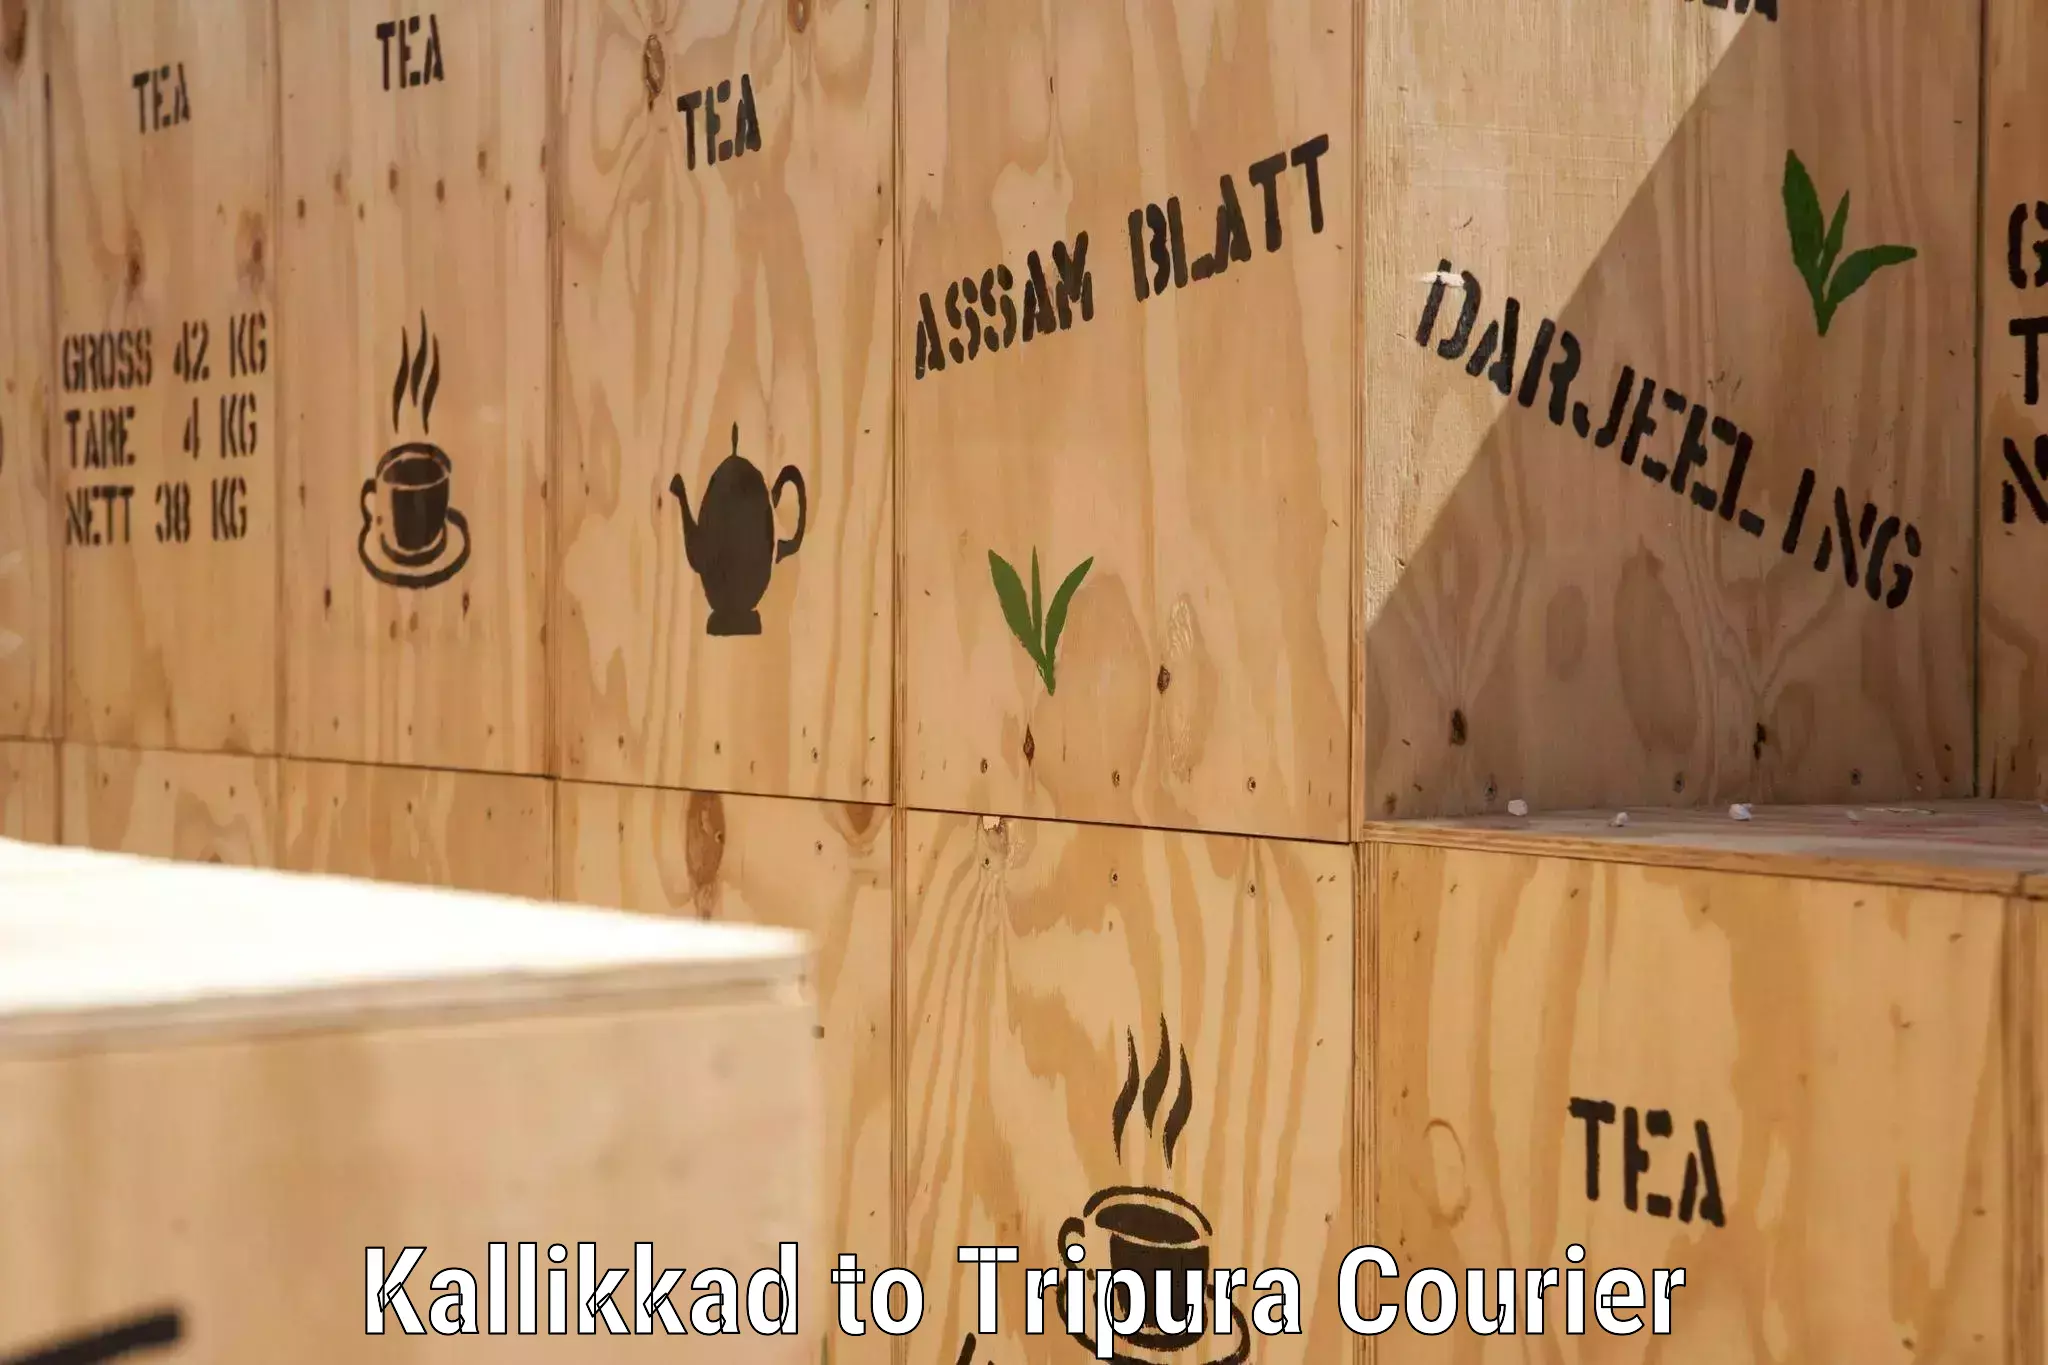 State-of-the-art courier technology Kallikkad to Kailashahar